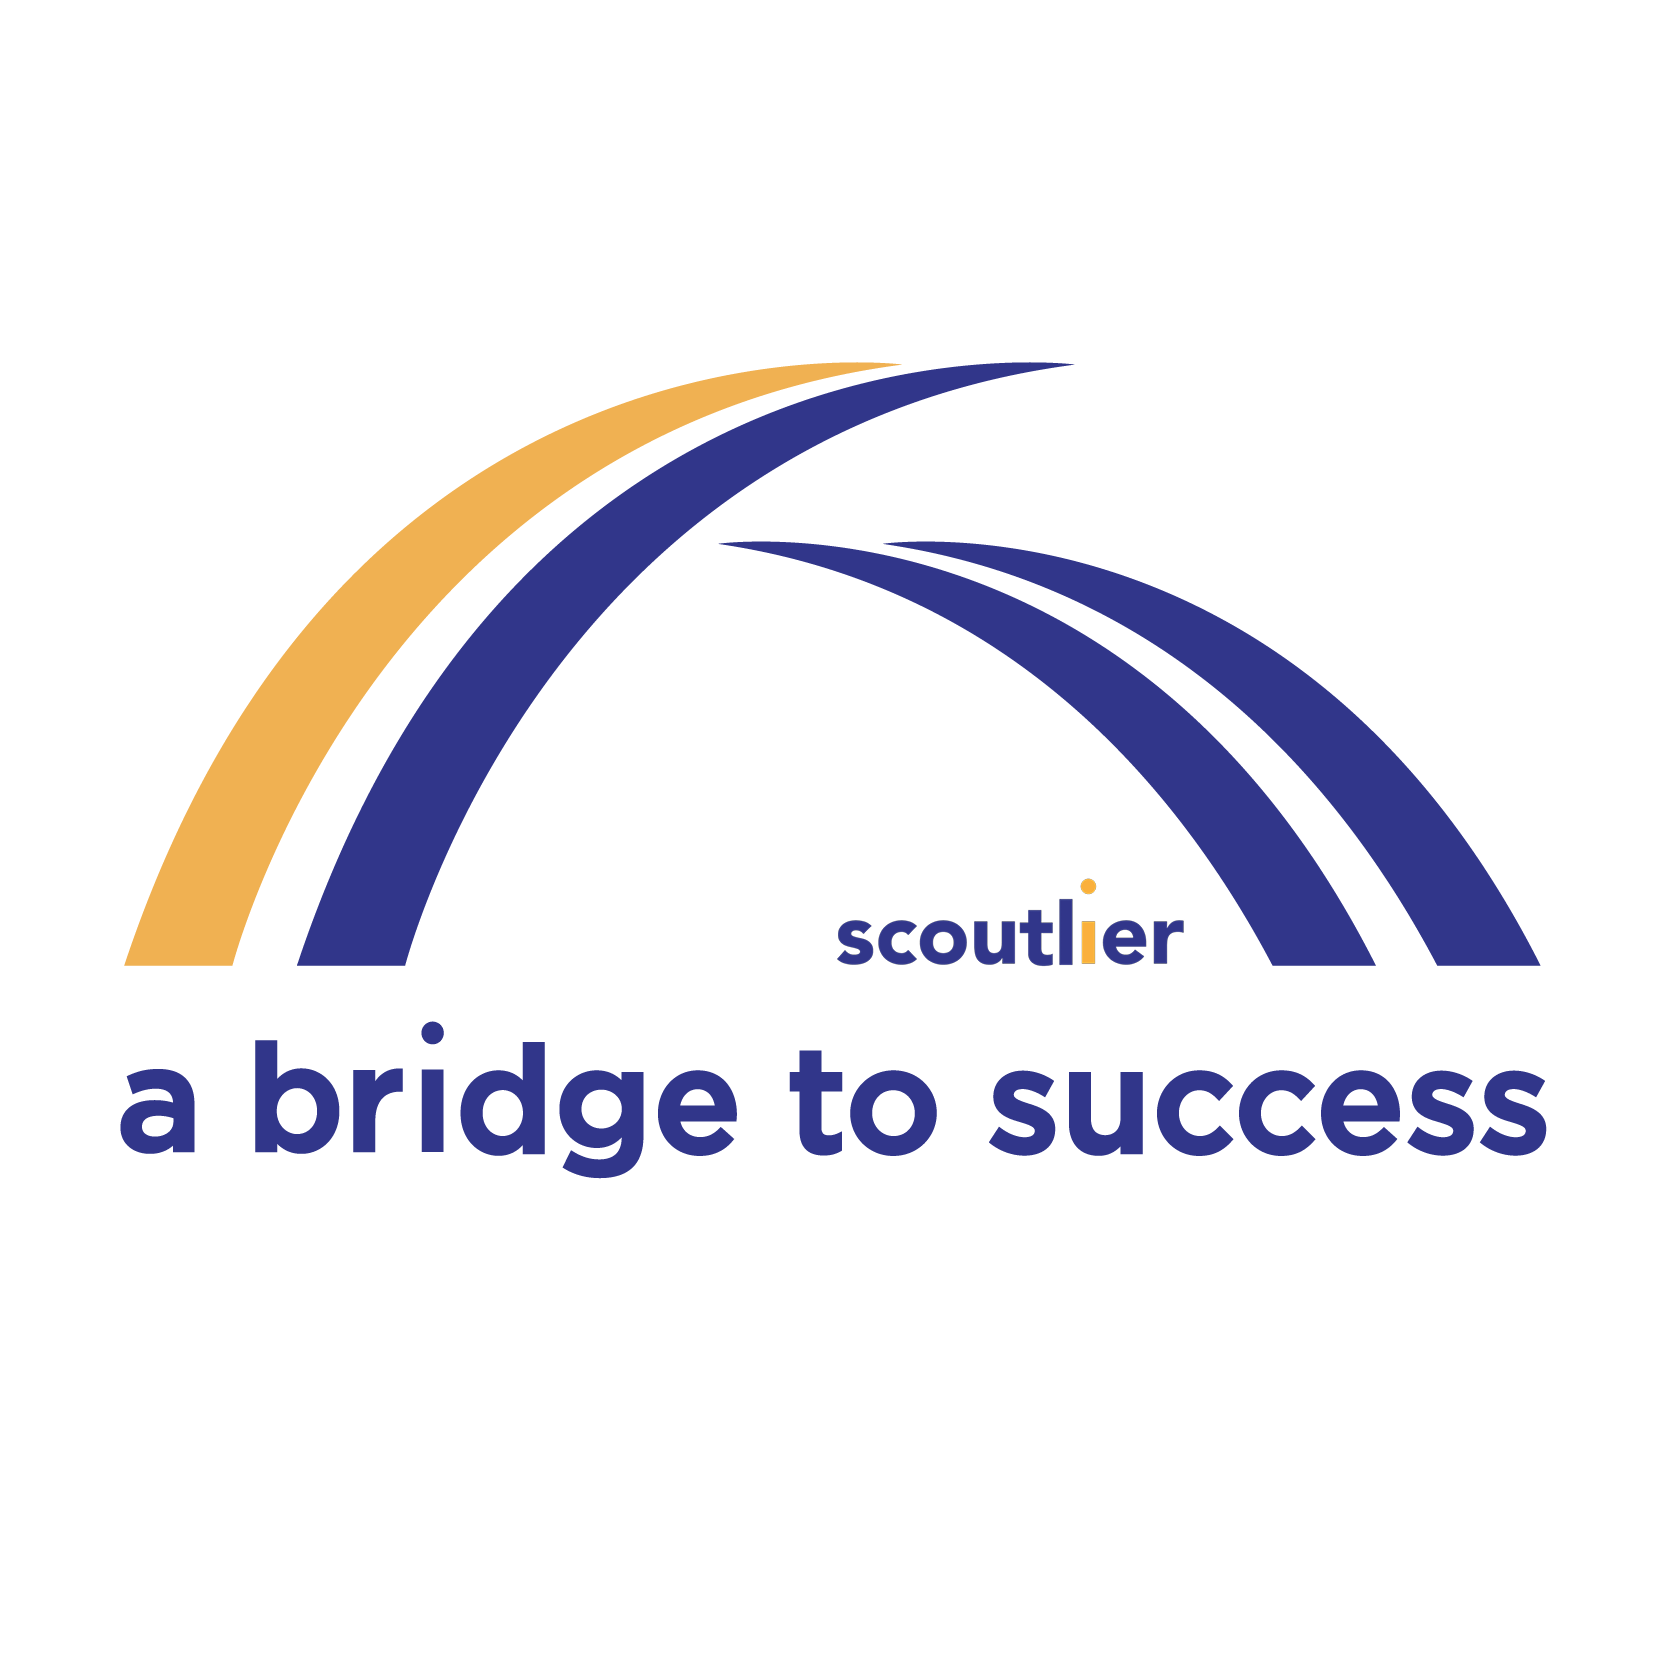 scoutlier-a-bridge-to-success-logo-rgb.png